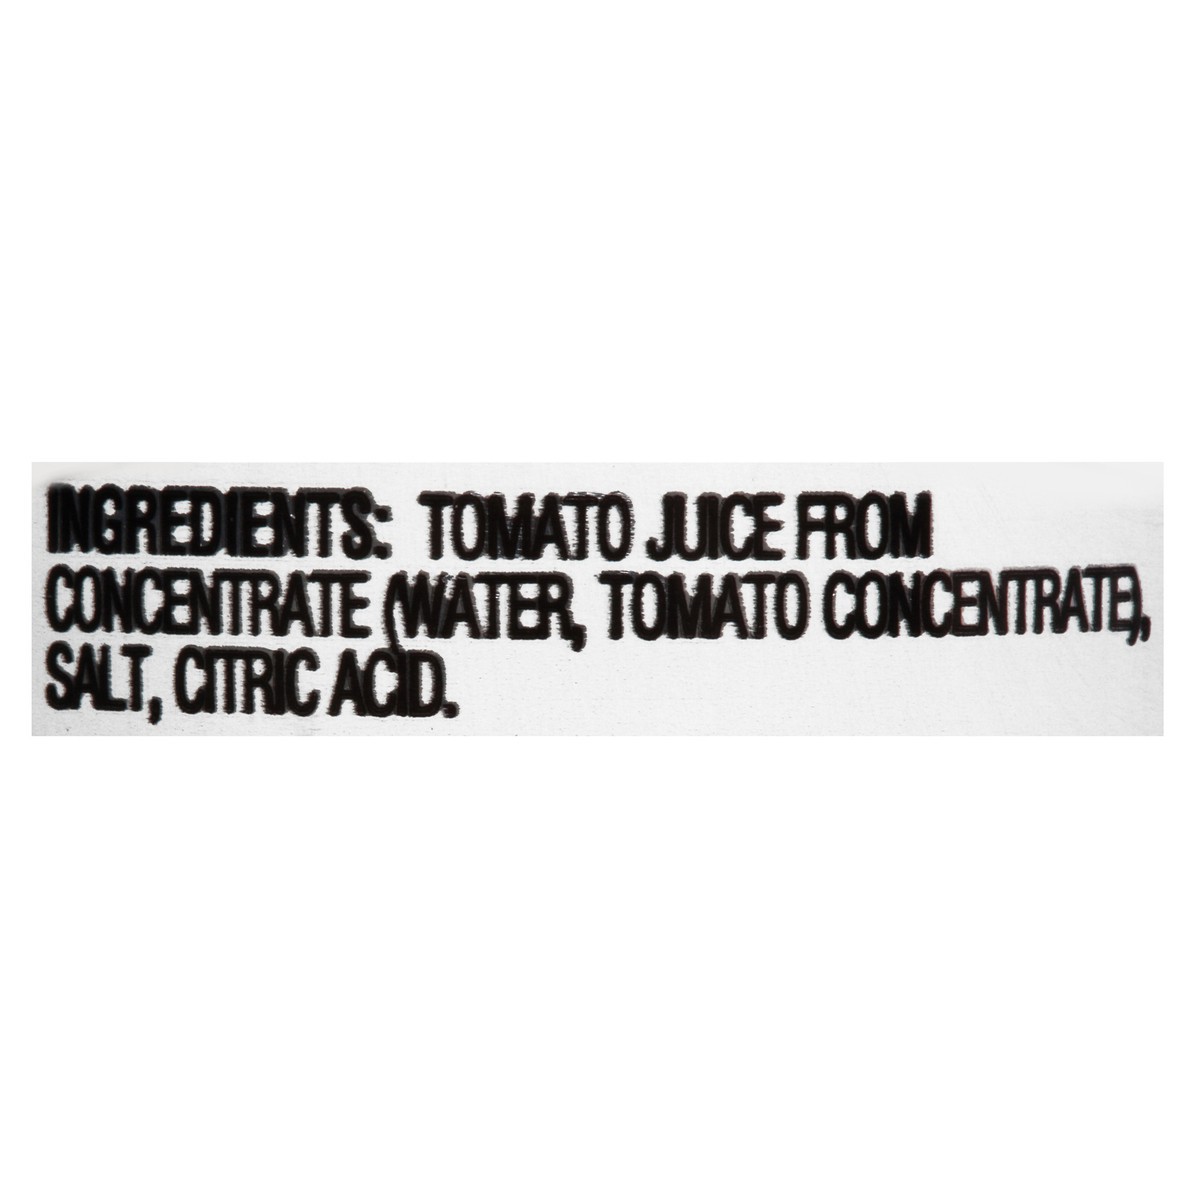 slide 9 of 14, Sacramento Premium 100% Tomato Juice 6-5.5 fl. oz. Cans, 6 ct